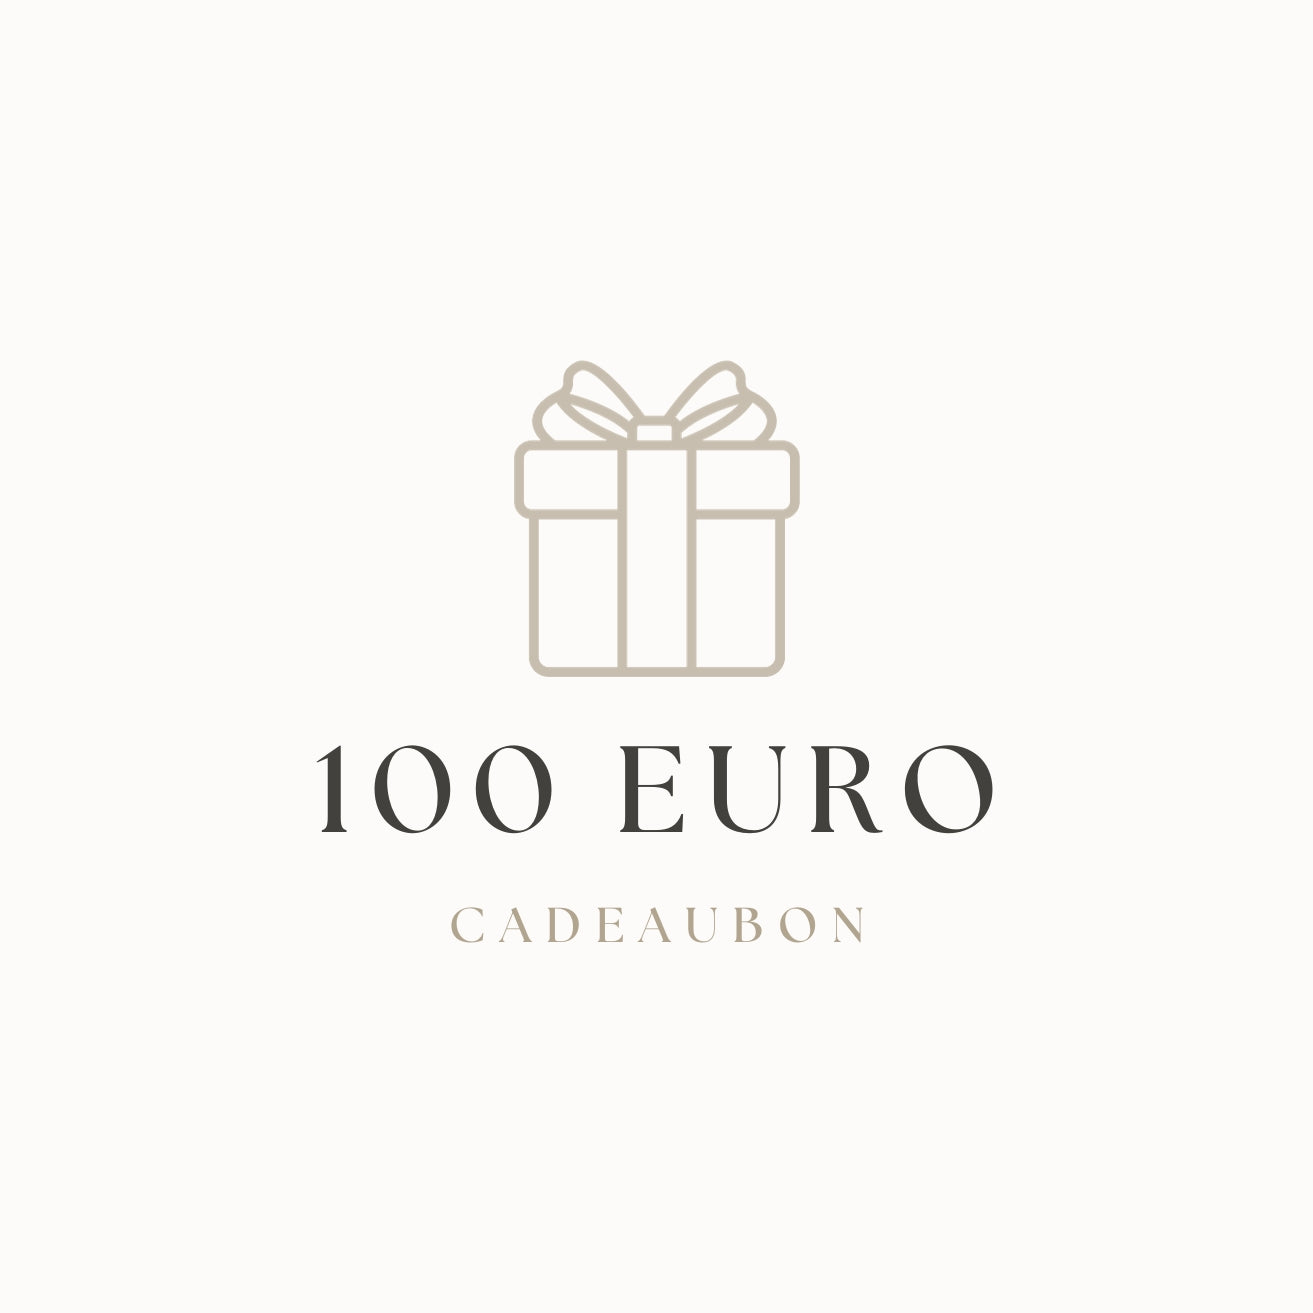 Cadeaubon | 100 euro